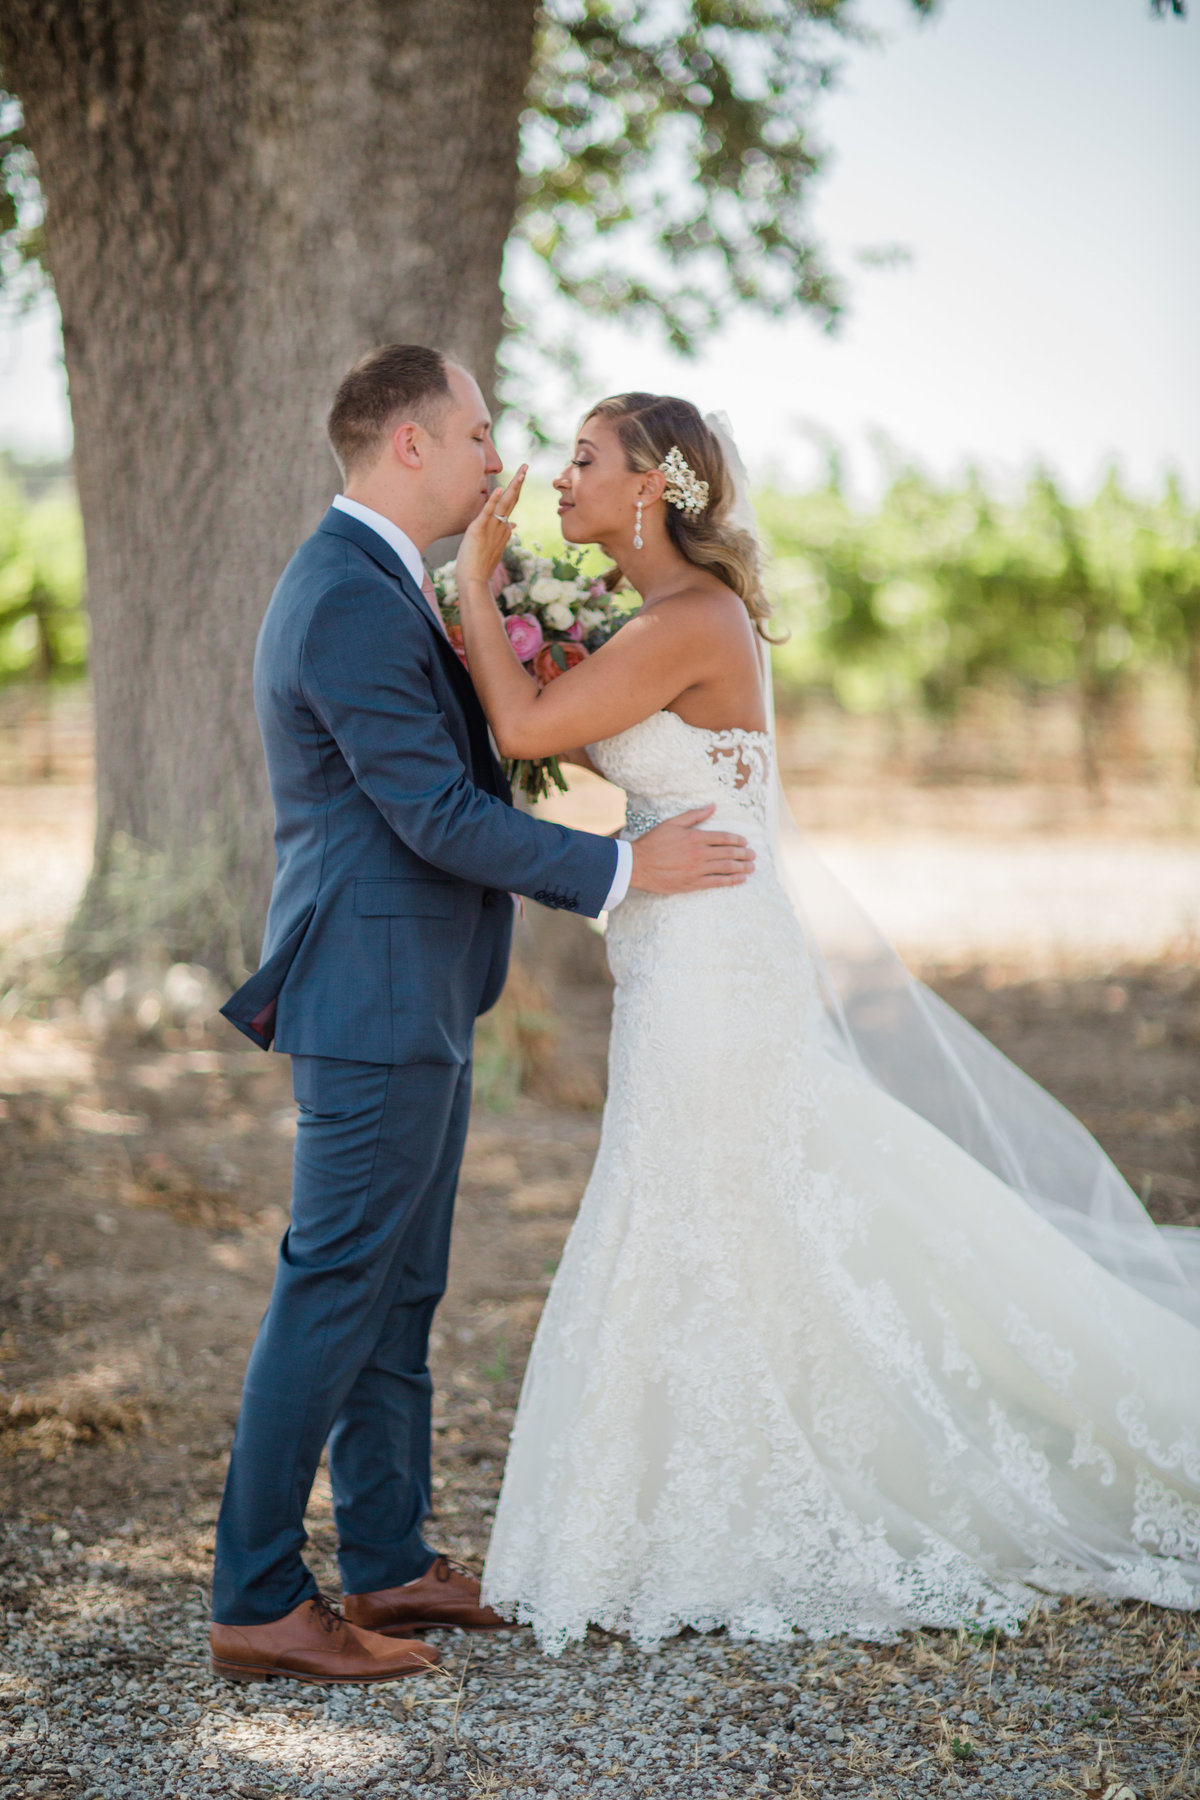 Jenna & Andrew's Oyster Ridge Wedding | Paso Robles Wedding Photographer | Katie Schoepflin Photography438